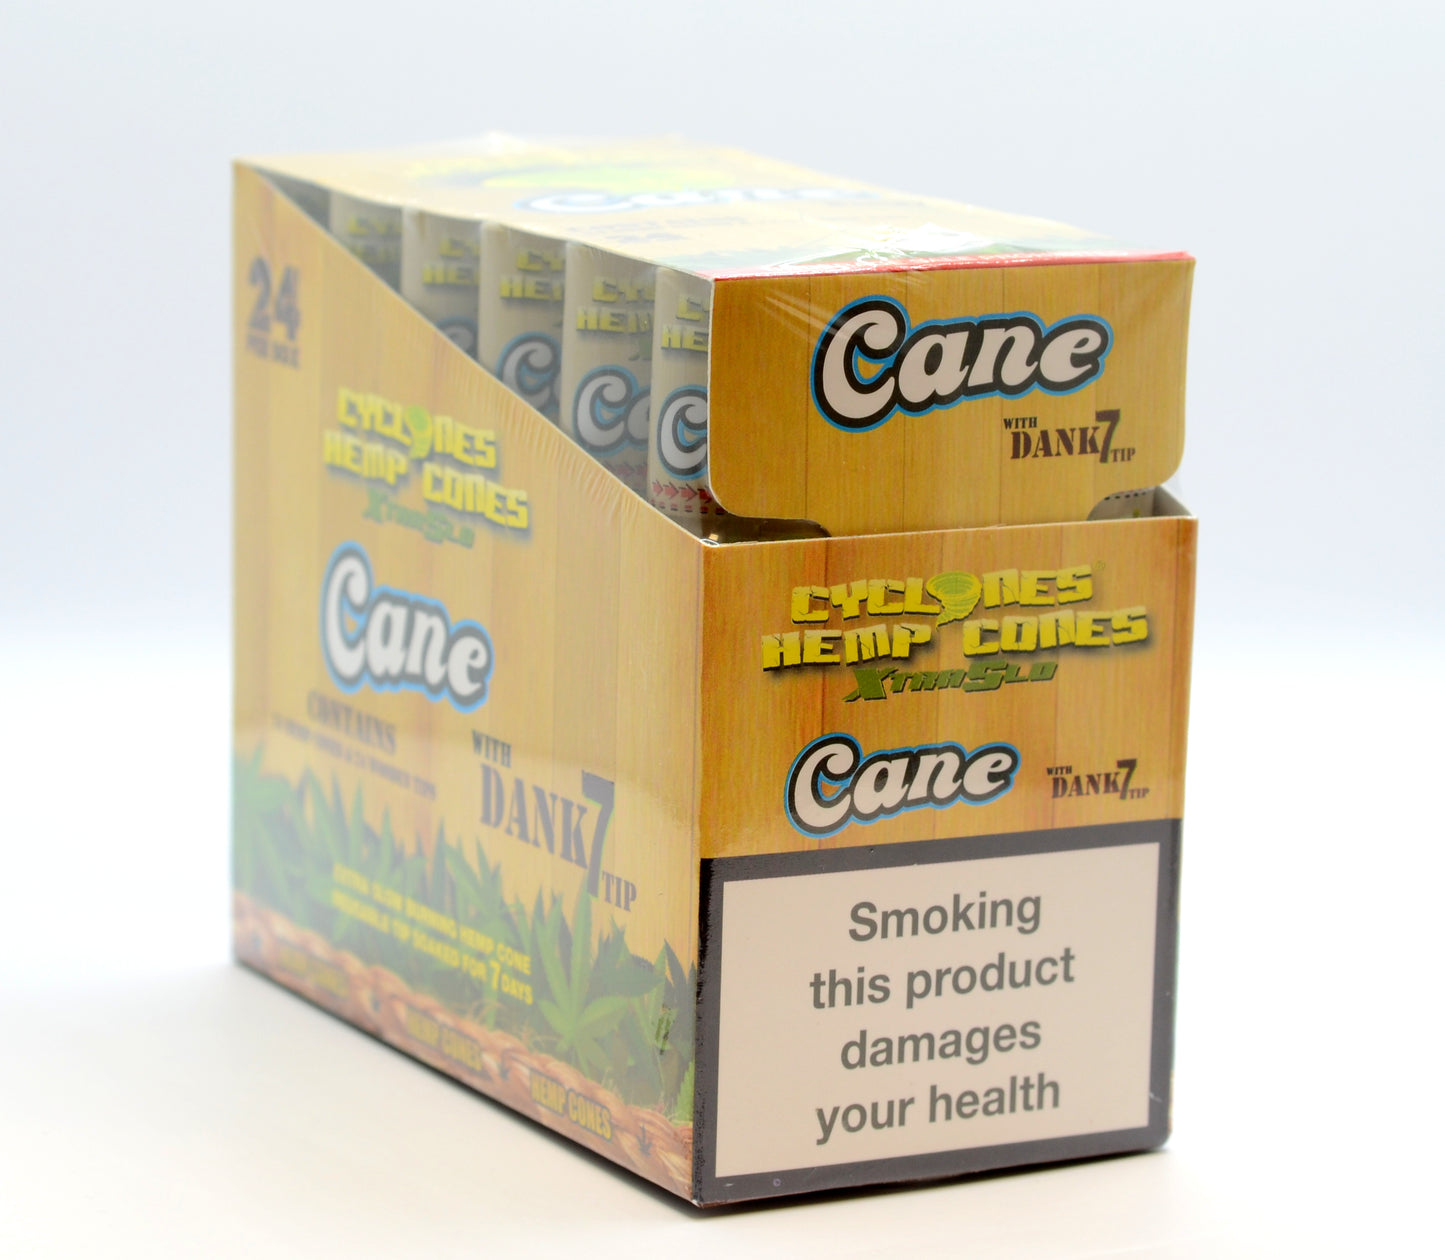 Cyclone - Hemp Cones + Dank 7 Tip Sugar Cane (2 per pack)